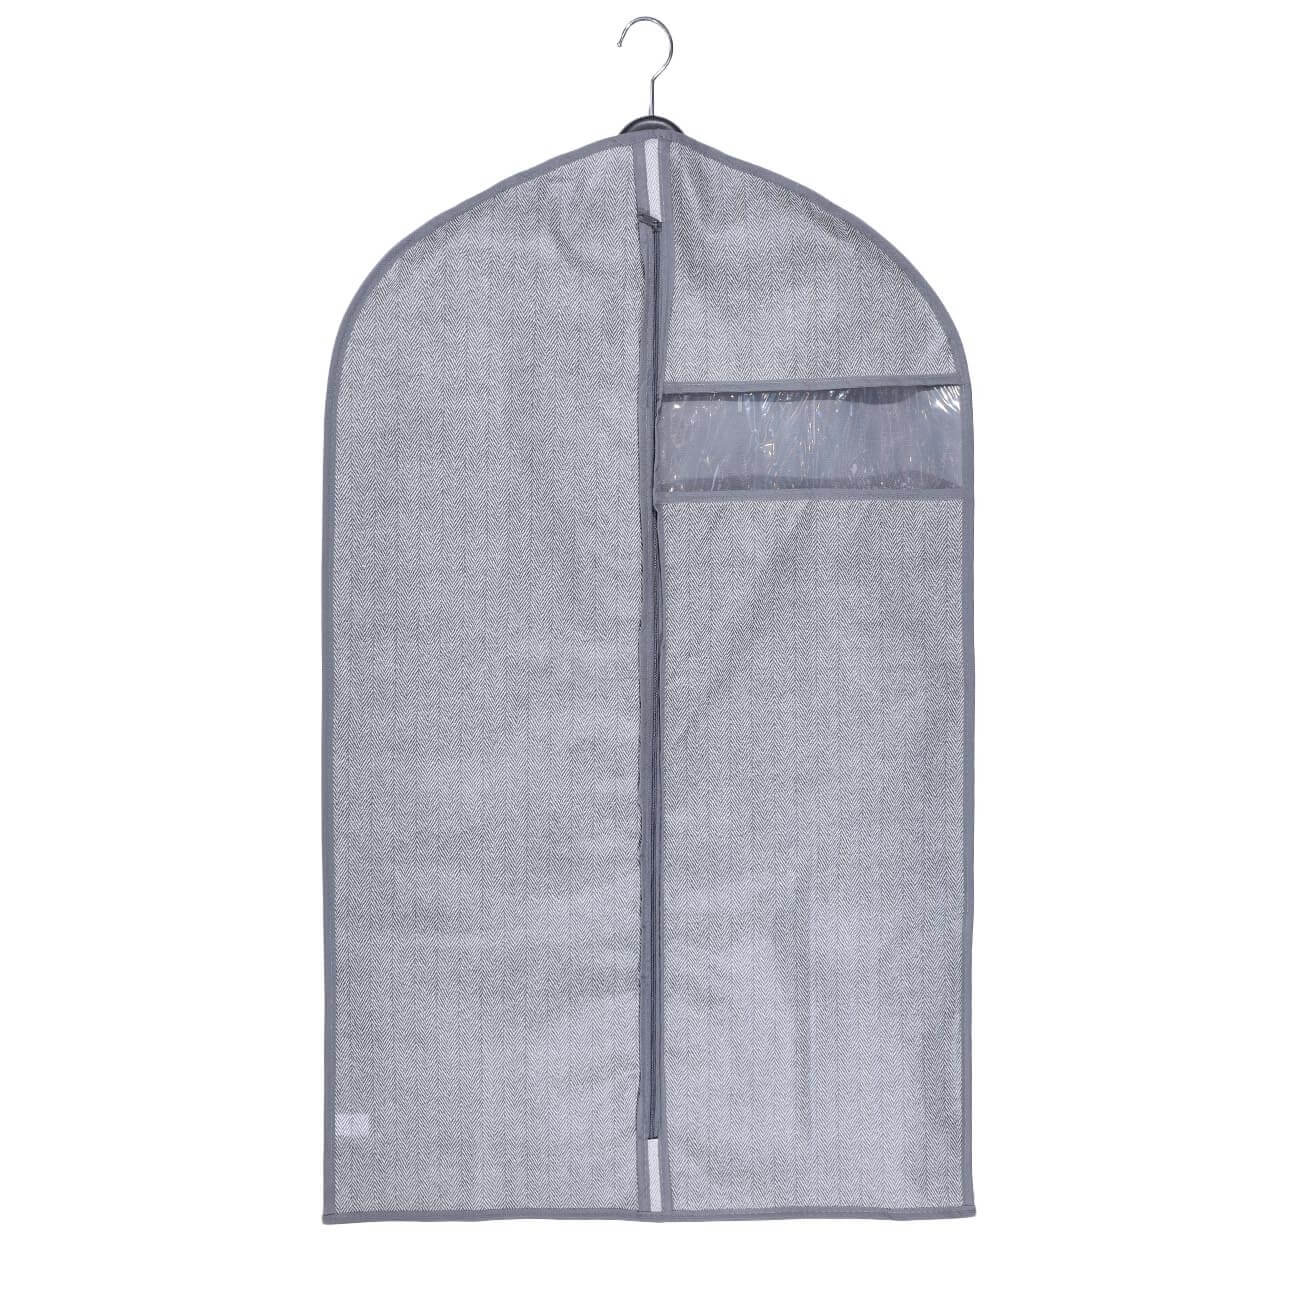 Чехол для одежды, 60х100 см, текстиль/ПВХ, серый, Pedant new чехол для широкой одежды paxwell